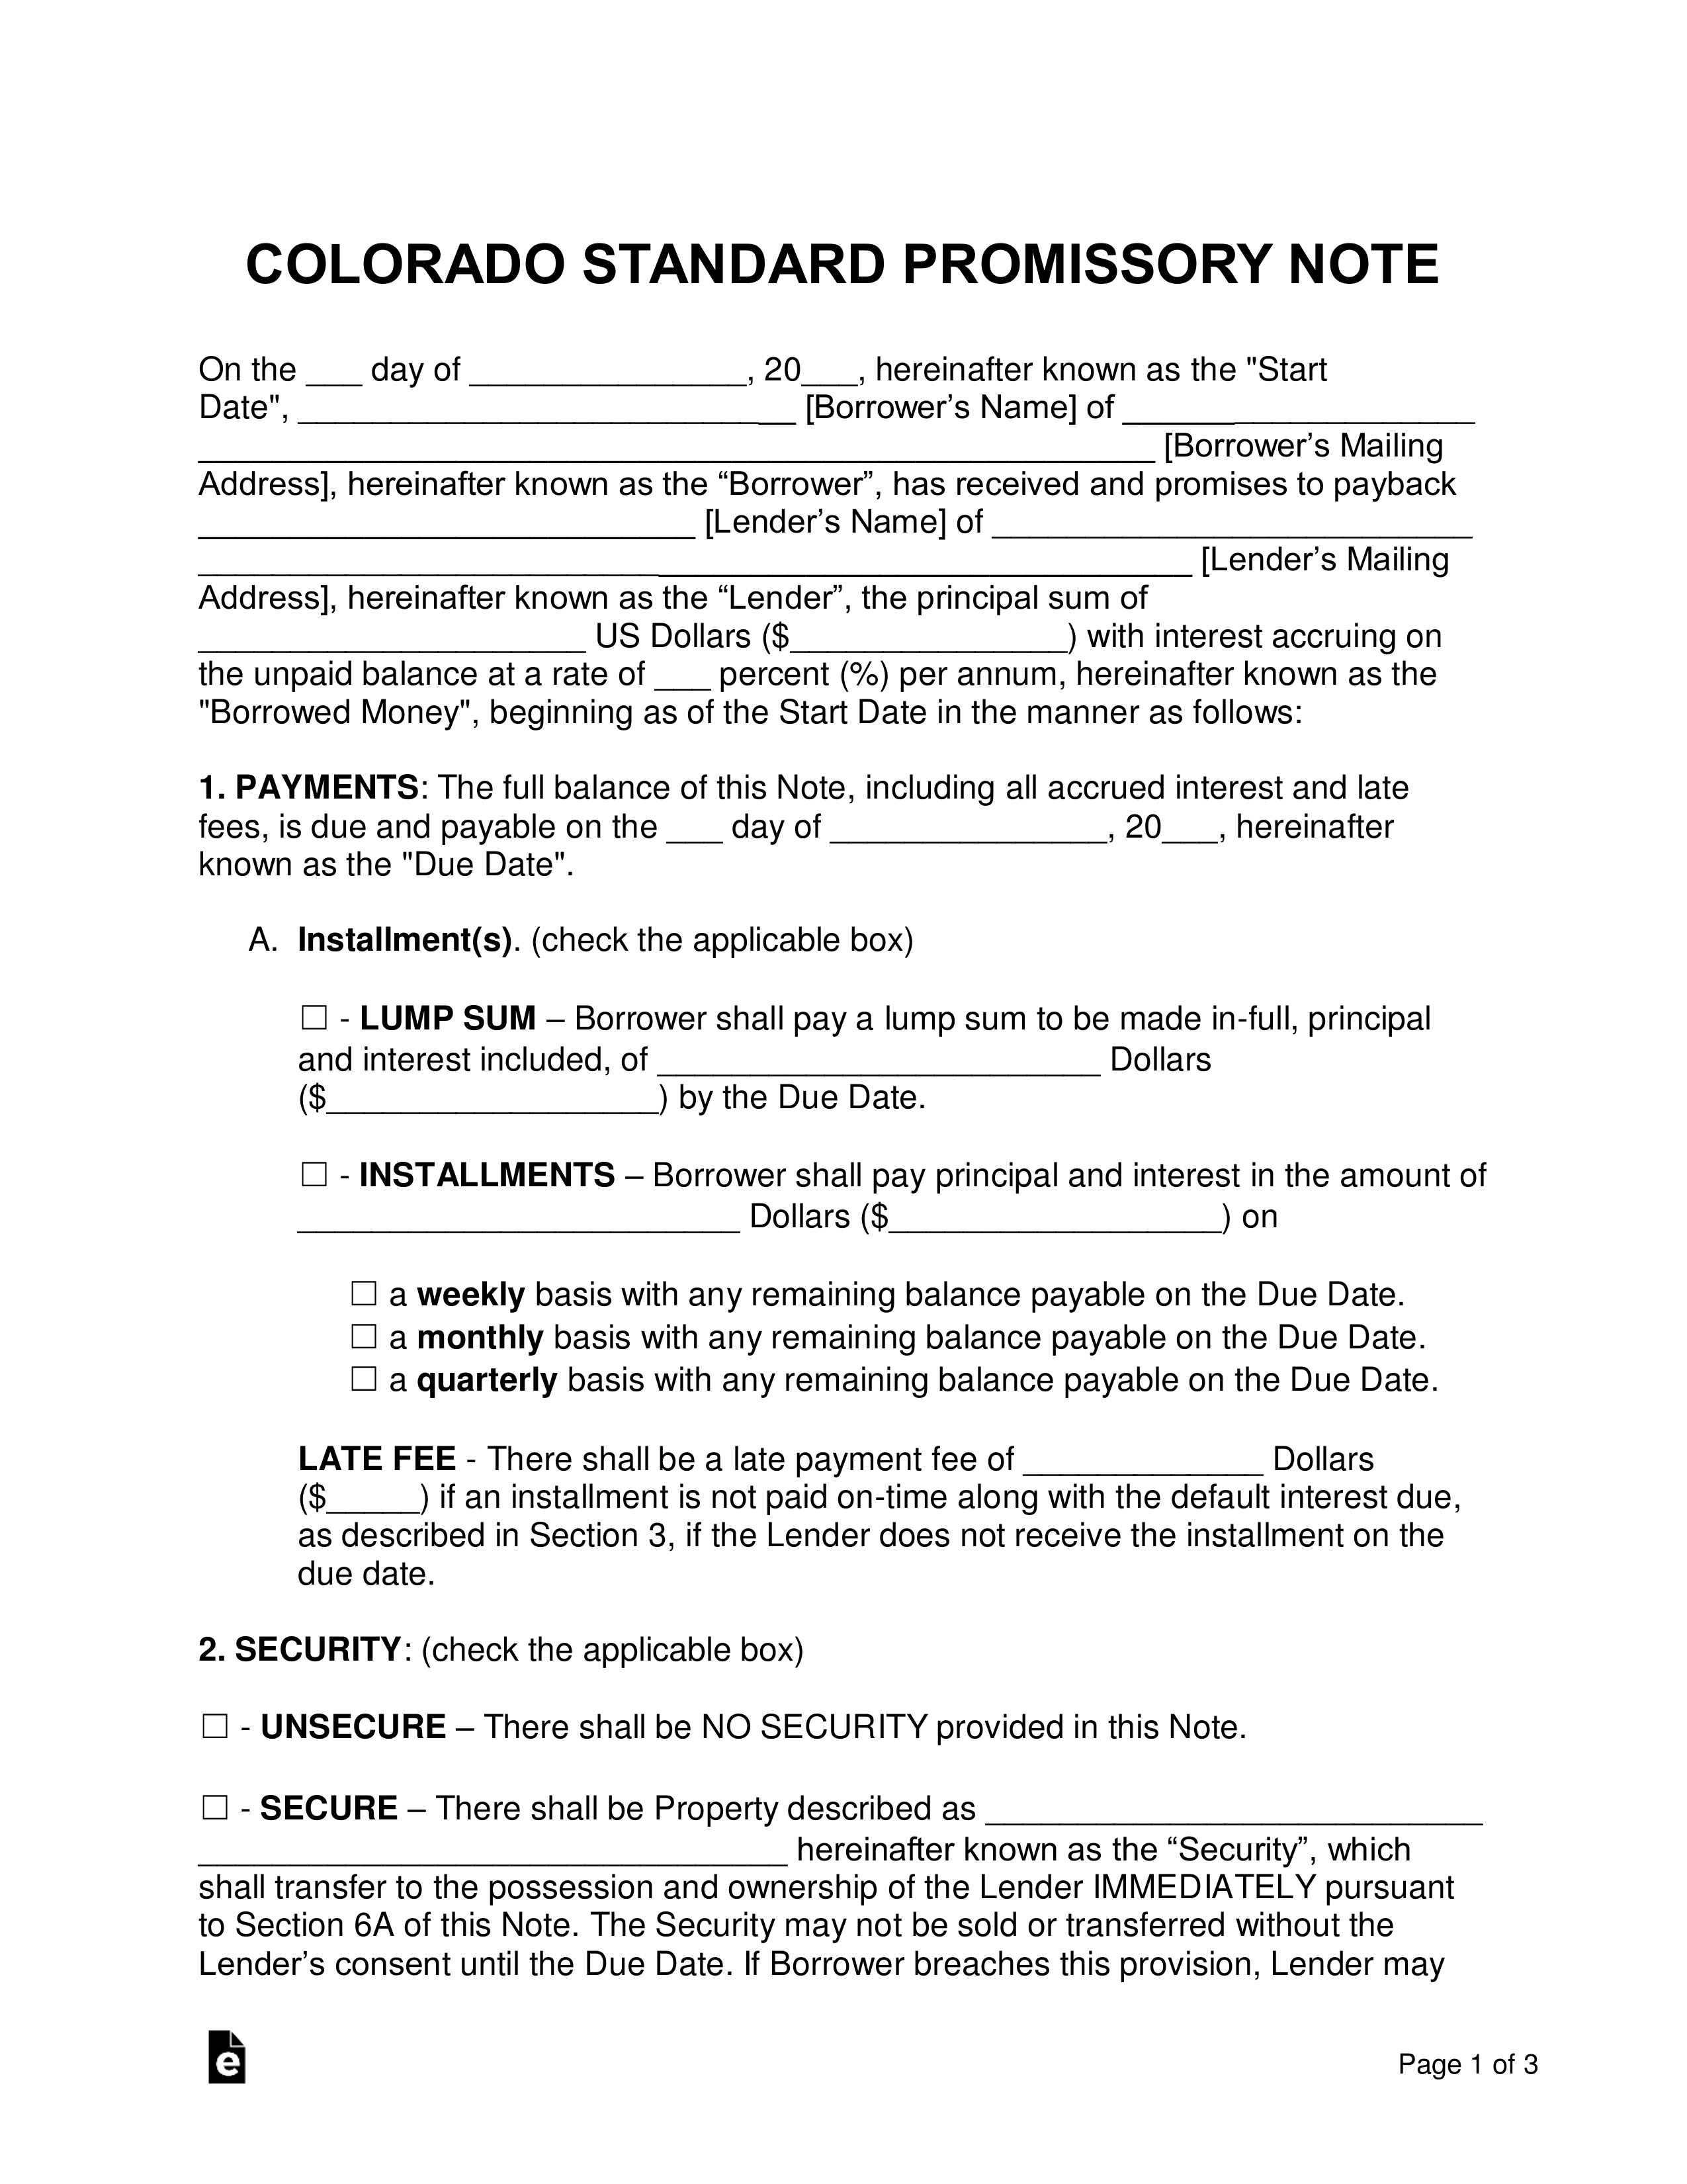 Colorado Promissory Note Templates (2)